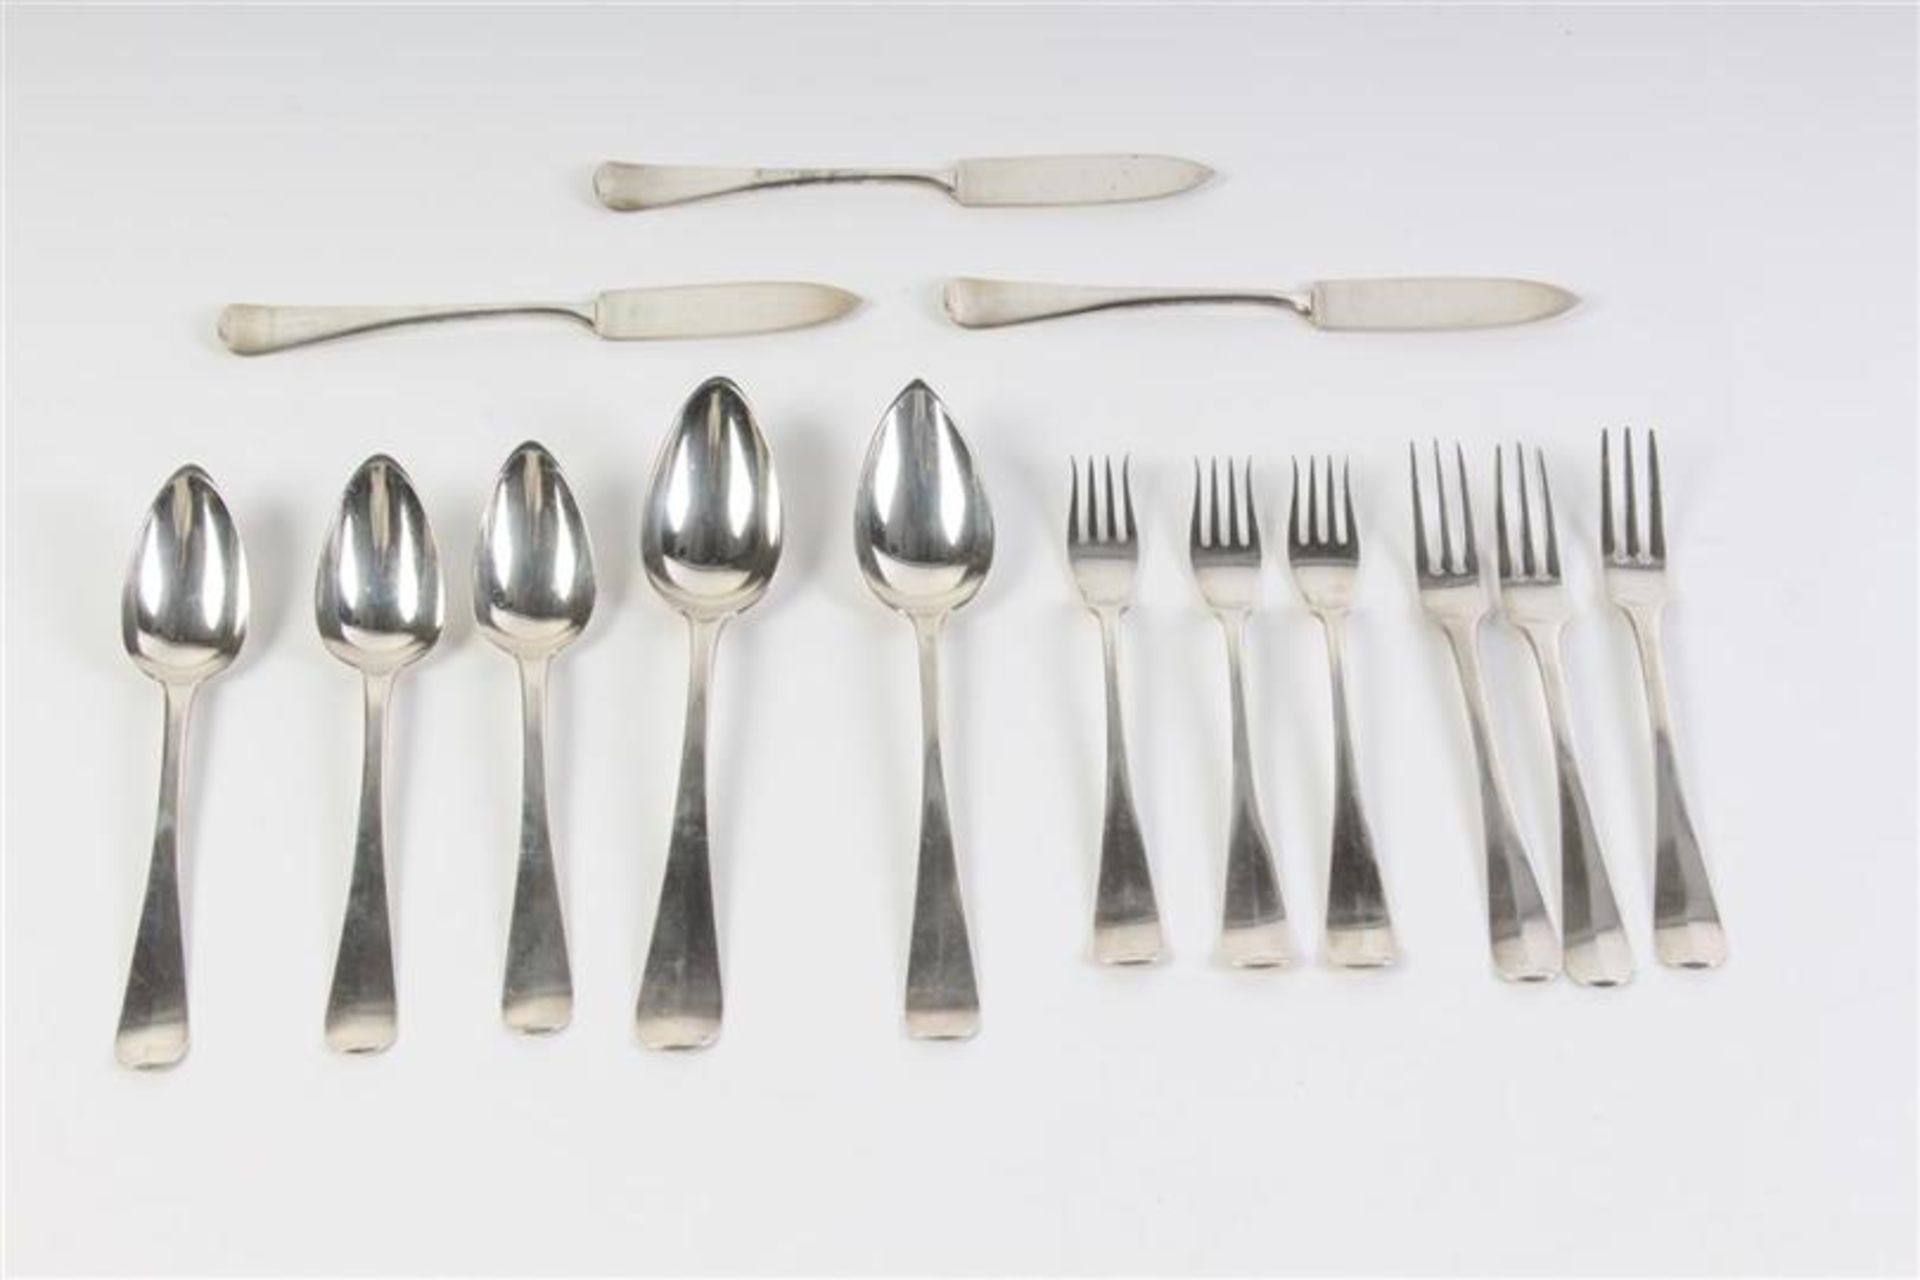 Divers zilver bestek bestaande uit 5 lepels, drie vorken en drie viscouverts, alle Hollands, 19e/20e